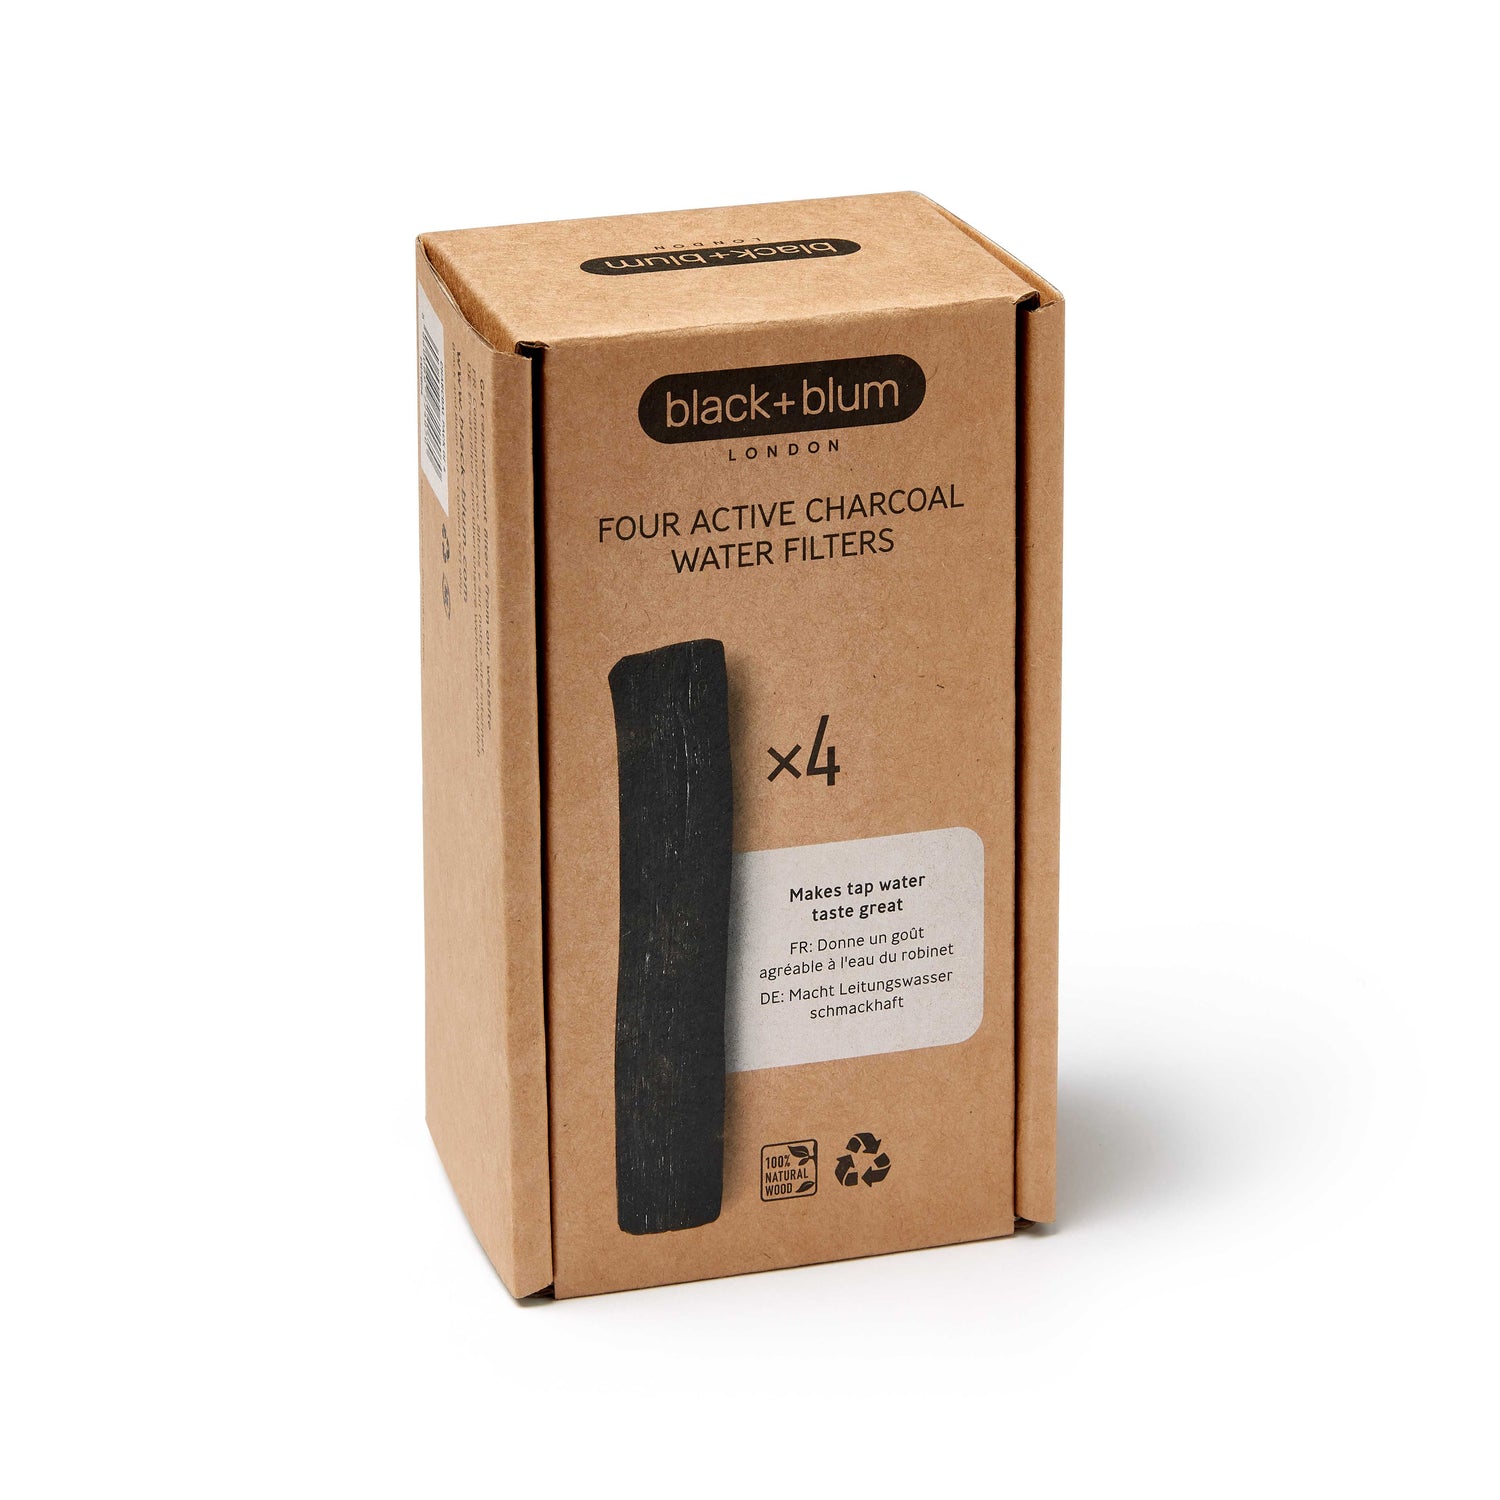 emballage du pack de 4 filtres de charbon actif binchotan black+blum